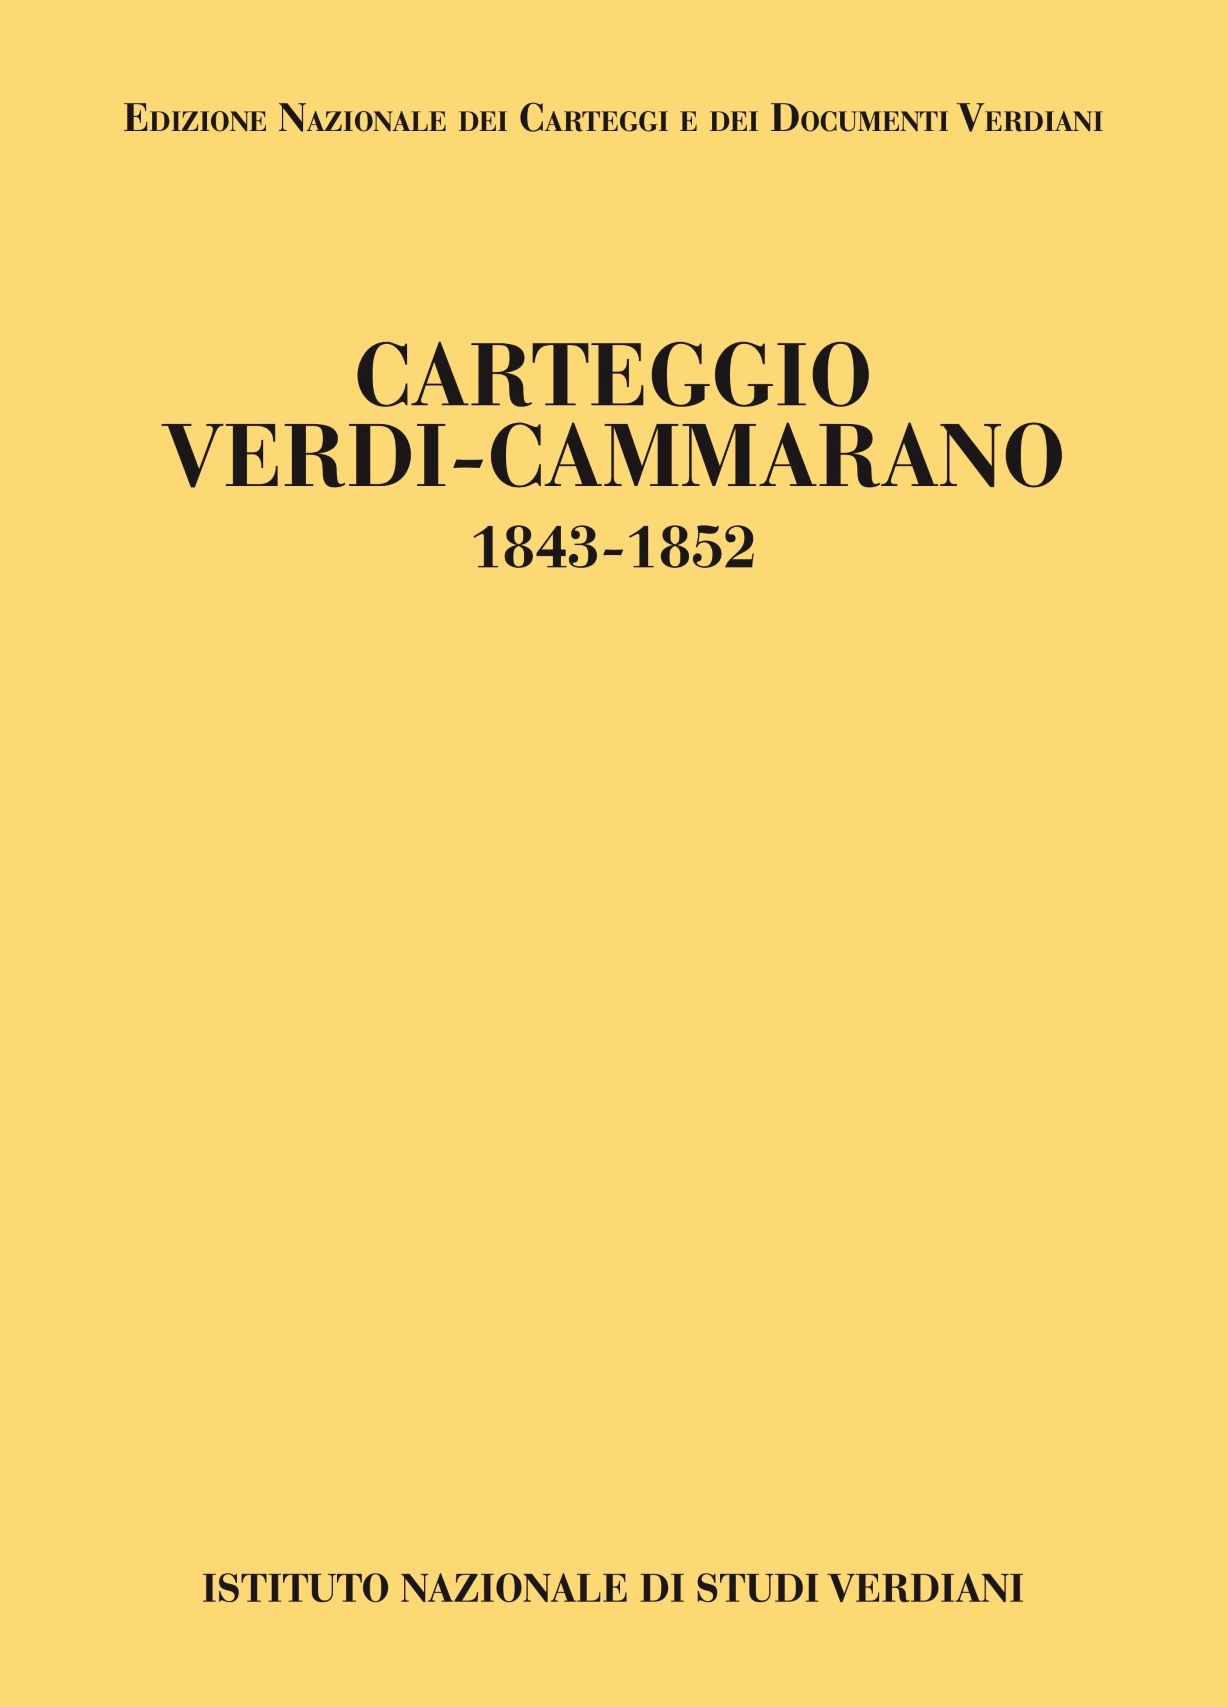 01_Copertina Verdi Cammarano